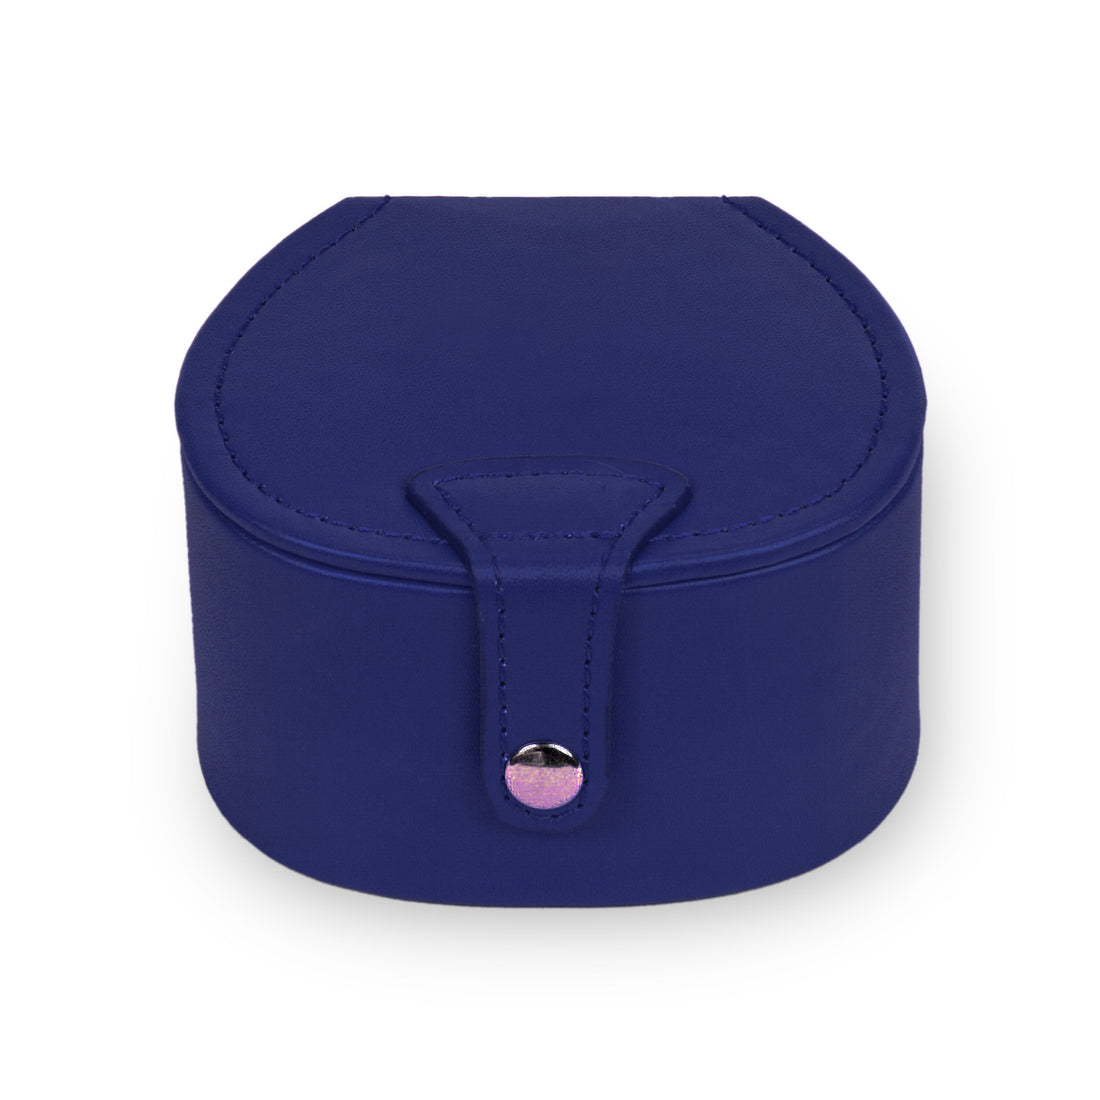 jewellery box Girlie standard / blue